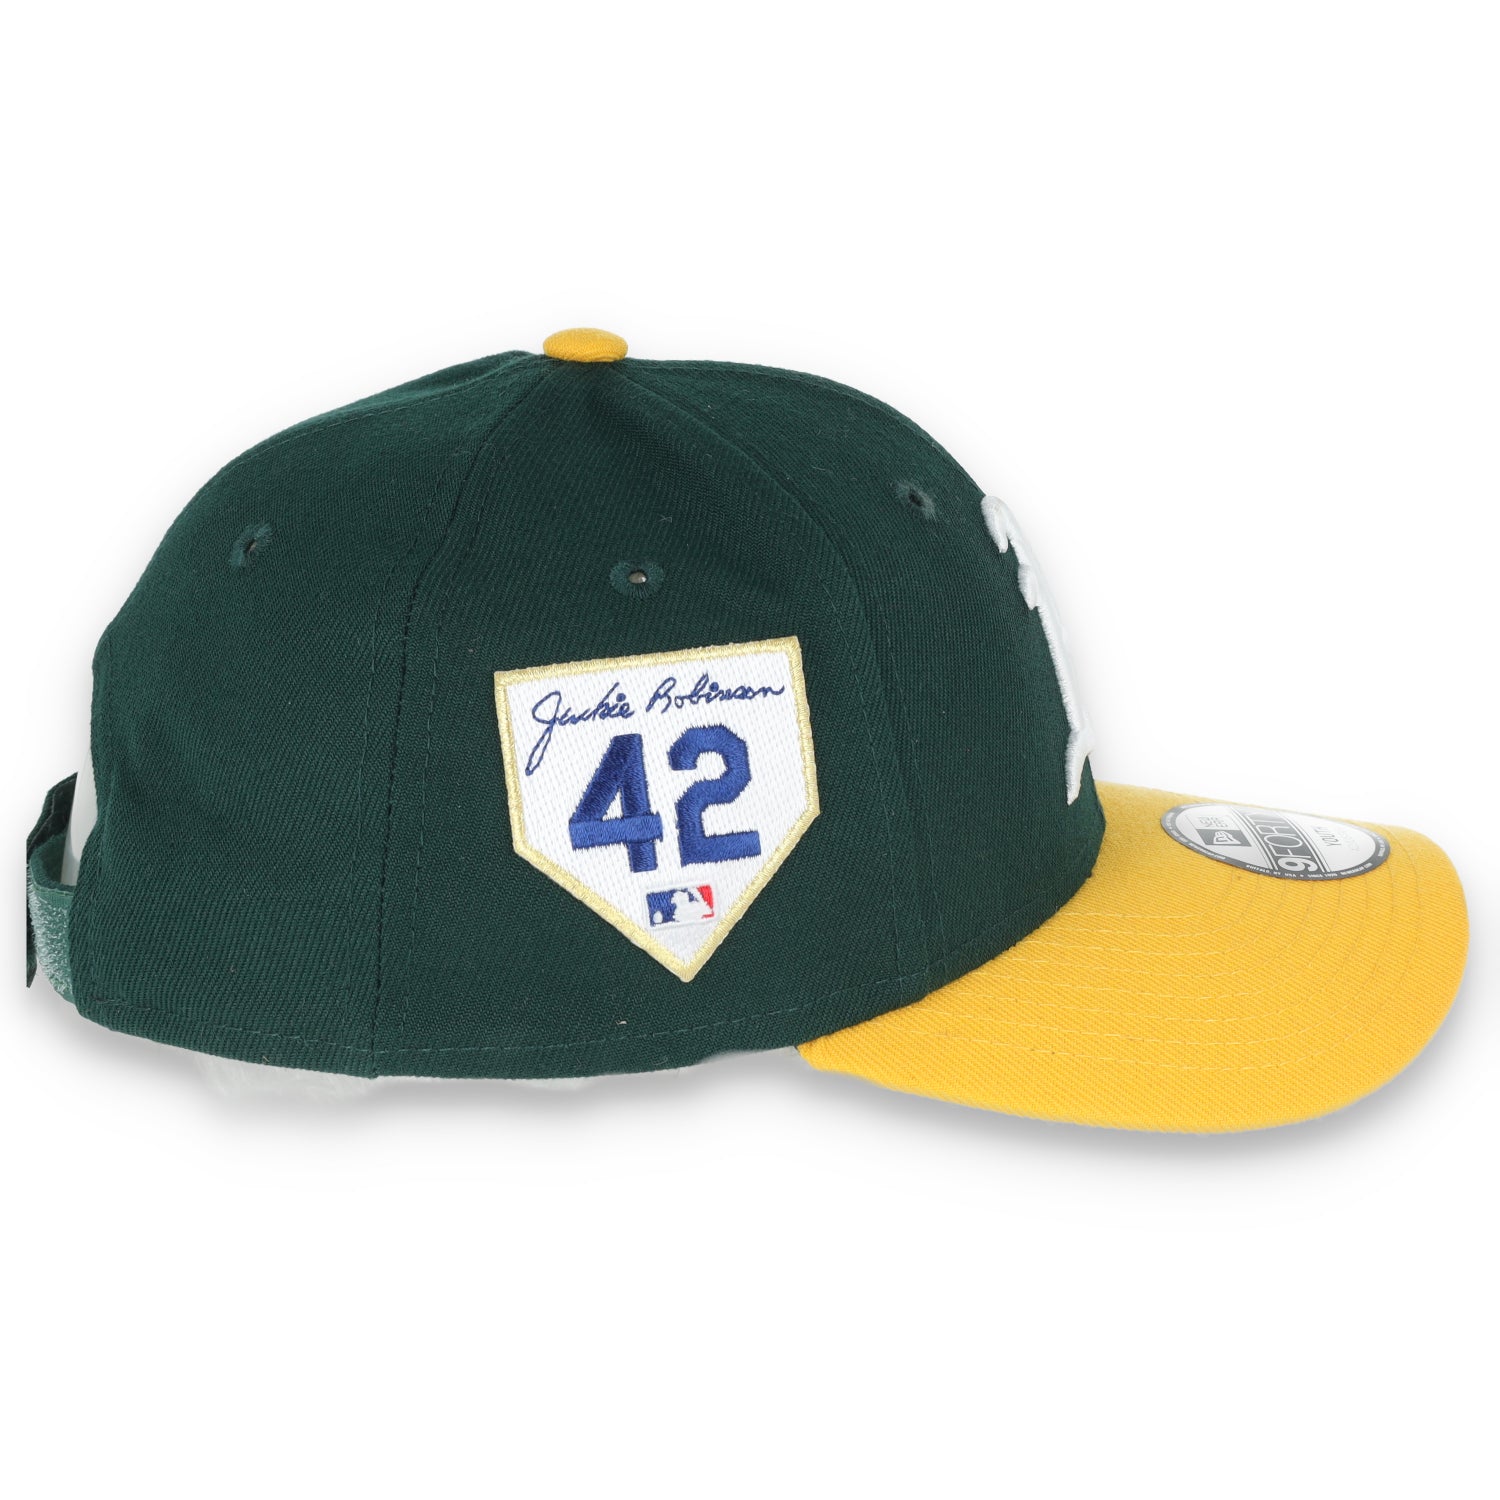 New Era Youth Oakland Athletics Jackie Robinson Day 9forty Adjustable Hat